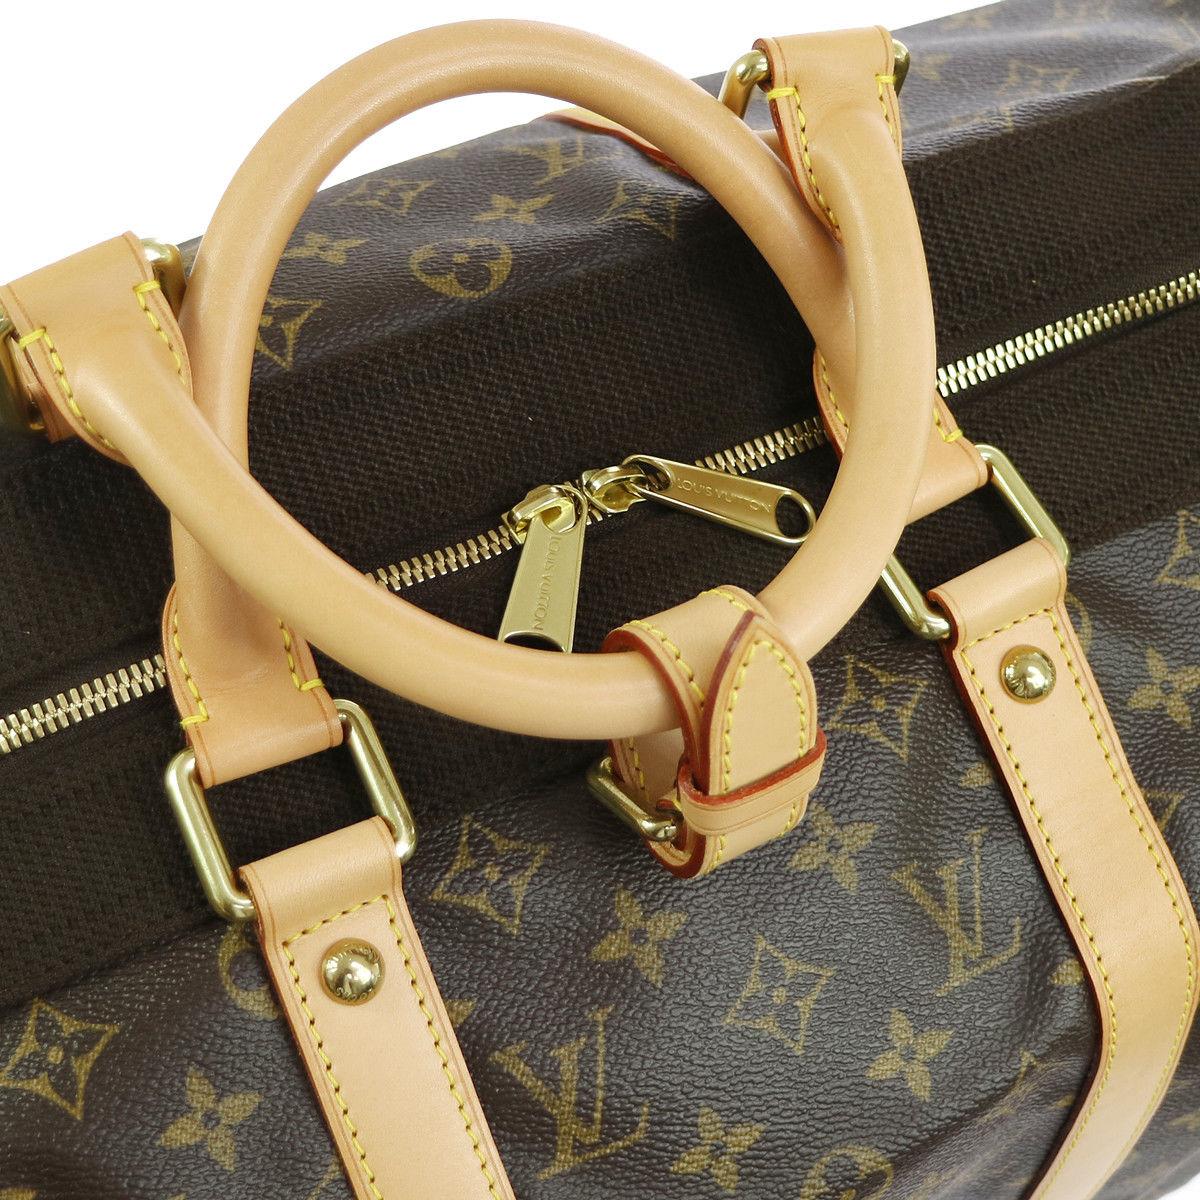 Louis Vuitton Monogram Large Men's Women's Travel Carryall Duffle Top Handle Bag

Monogram canvas
Leather trim
Gold tone hardware
Zipper closure
Made in France
Date code present
Handle drop 4.25